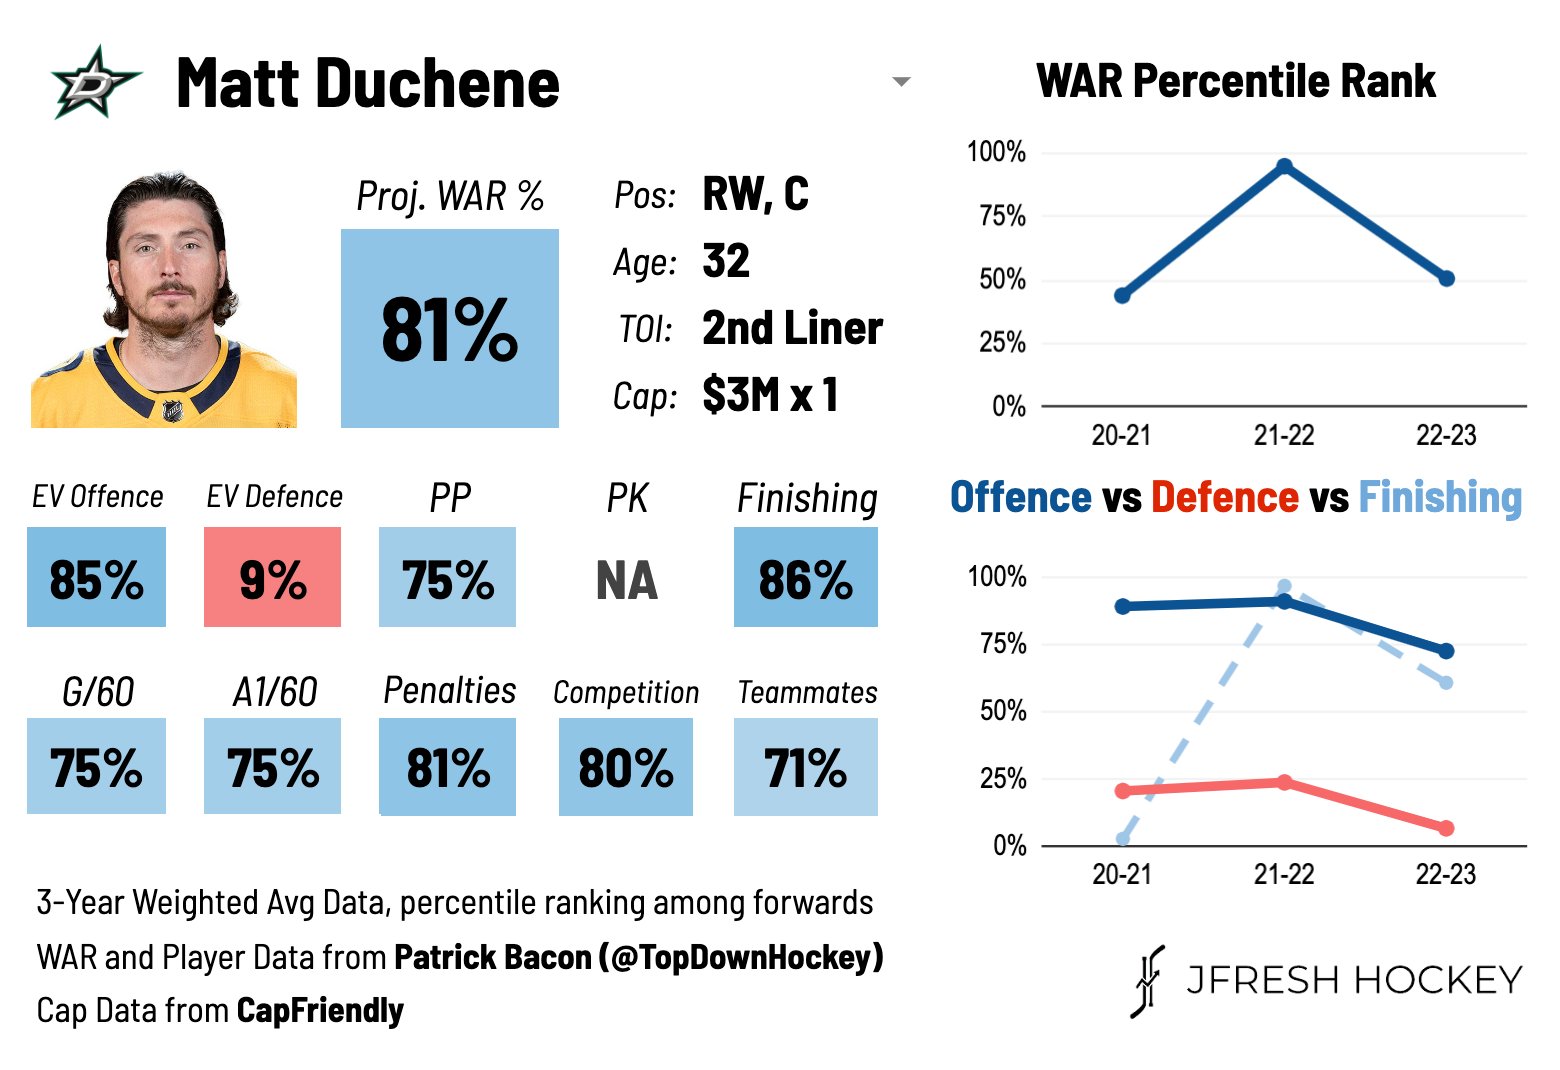 Stars sign Duchene to one-year, $3M deal 